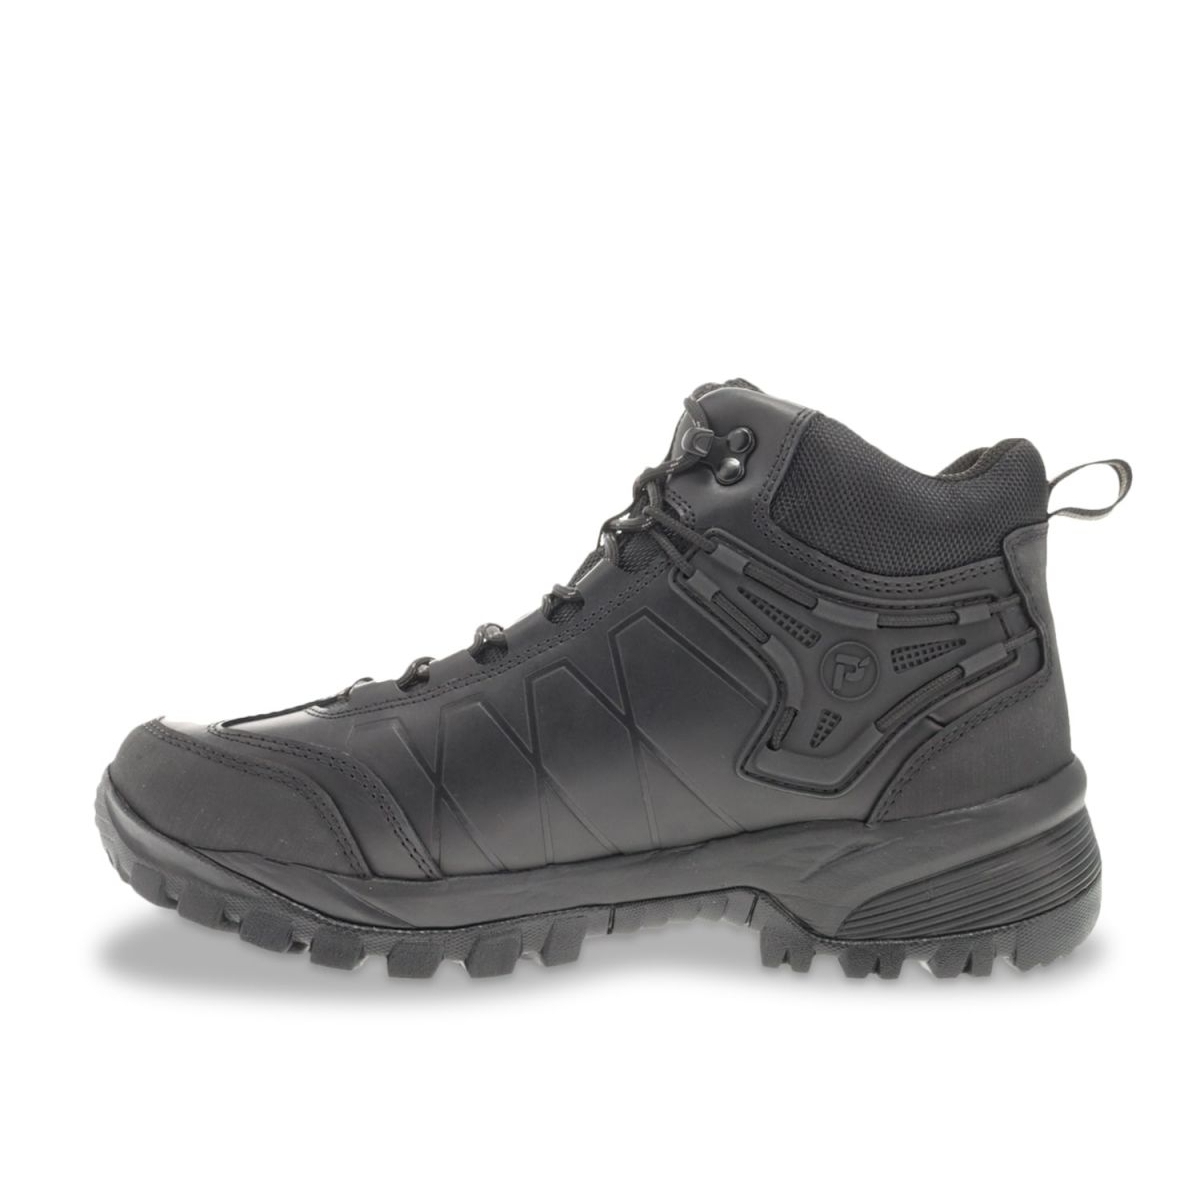 Propet Men's Ridge Walker Force Hiking Boots Black - MBA052LBLK BLACK - BLACK, 9.5